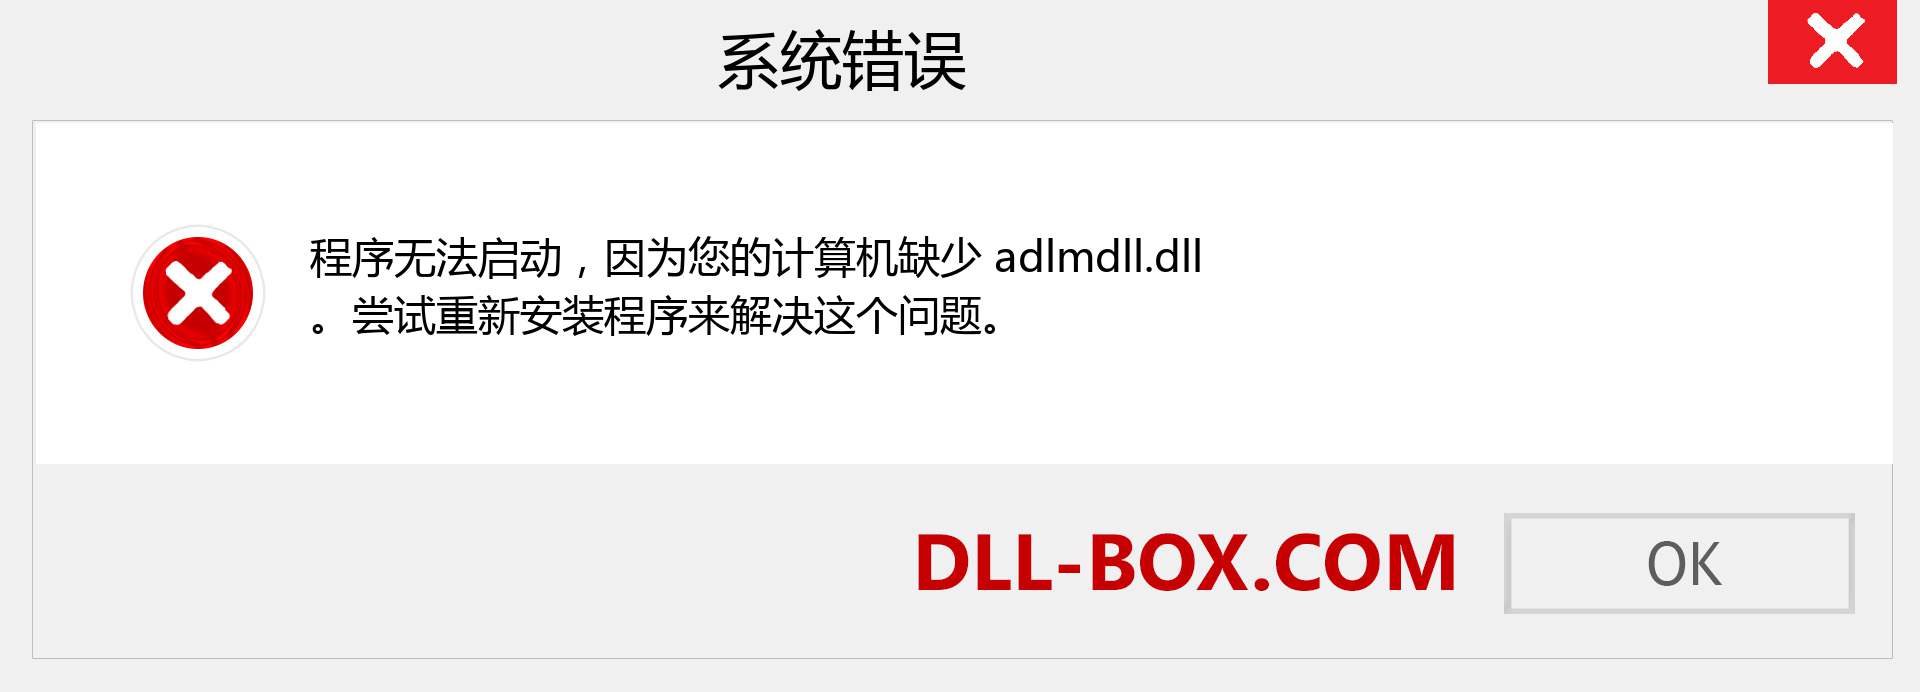 adlmdll.dll 文件丢失？。 适用于 Windows 7、8、10 的下载 - 修复 Windows、照片、图像上的 adlmdll dll 丢失错误